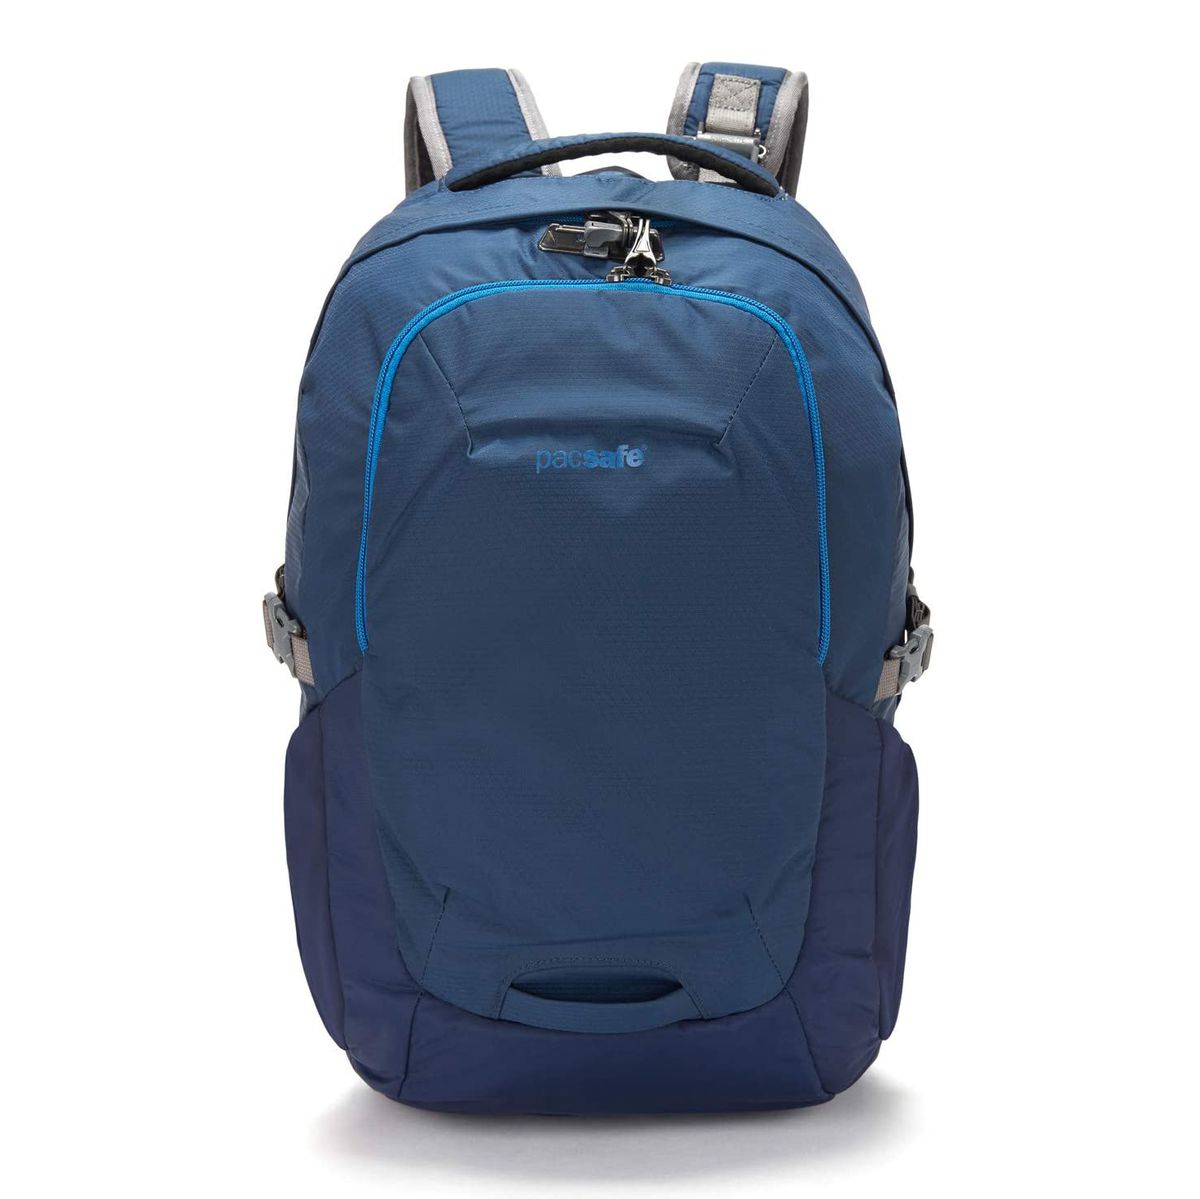 Pacsafe Venturesafe G3 25 Liter Anti Theft Travel Backpack